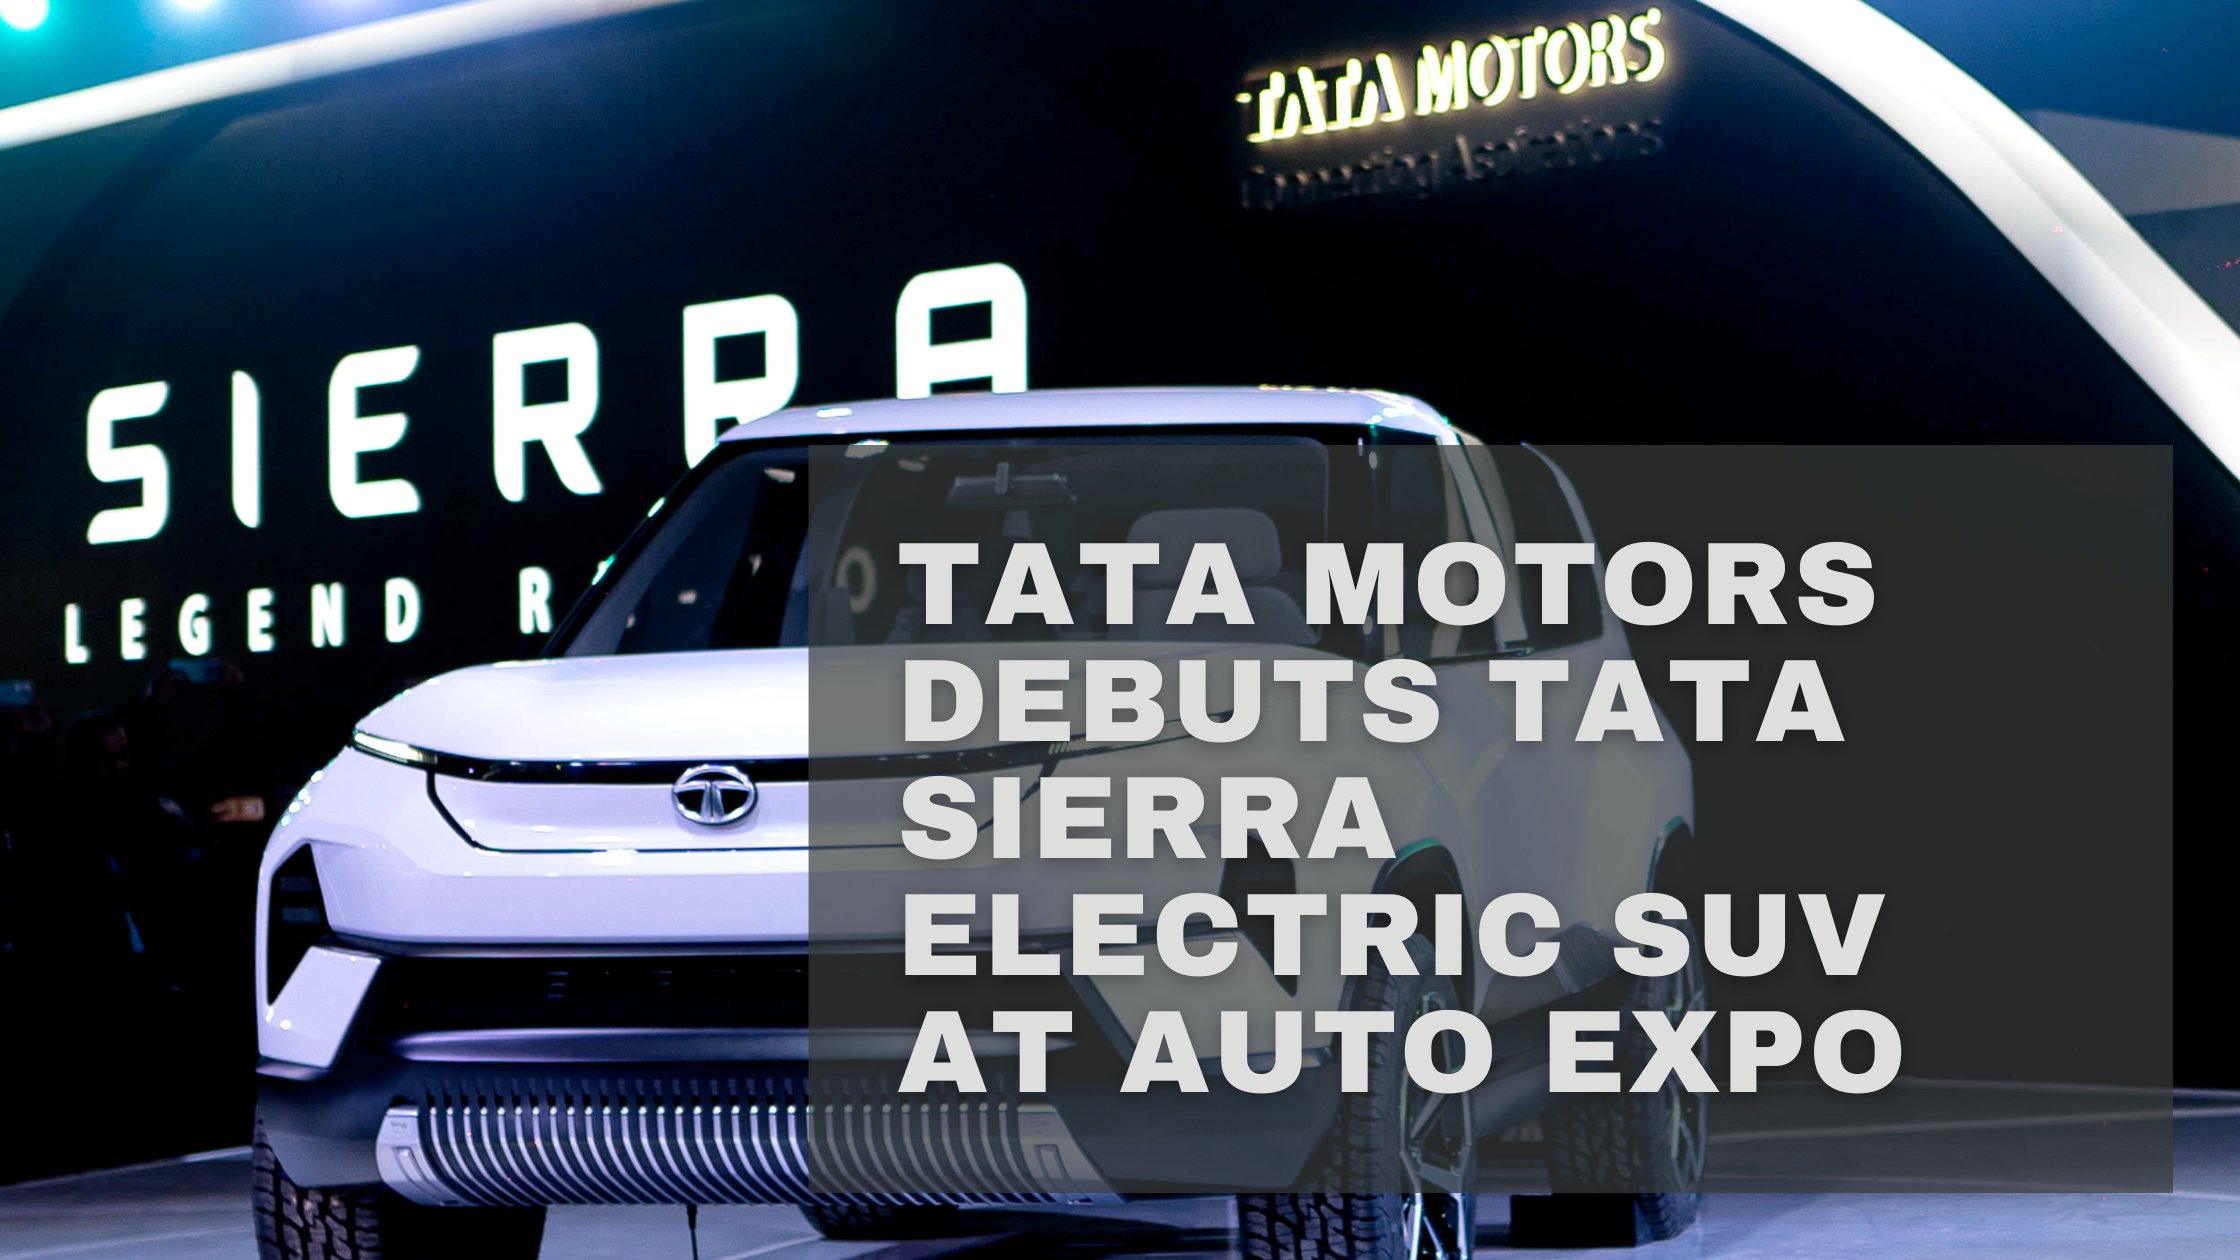 Tata Motors debuts Tata Sierra Electric SUV at Auto Expo